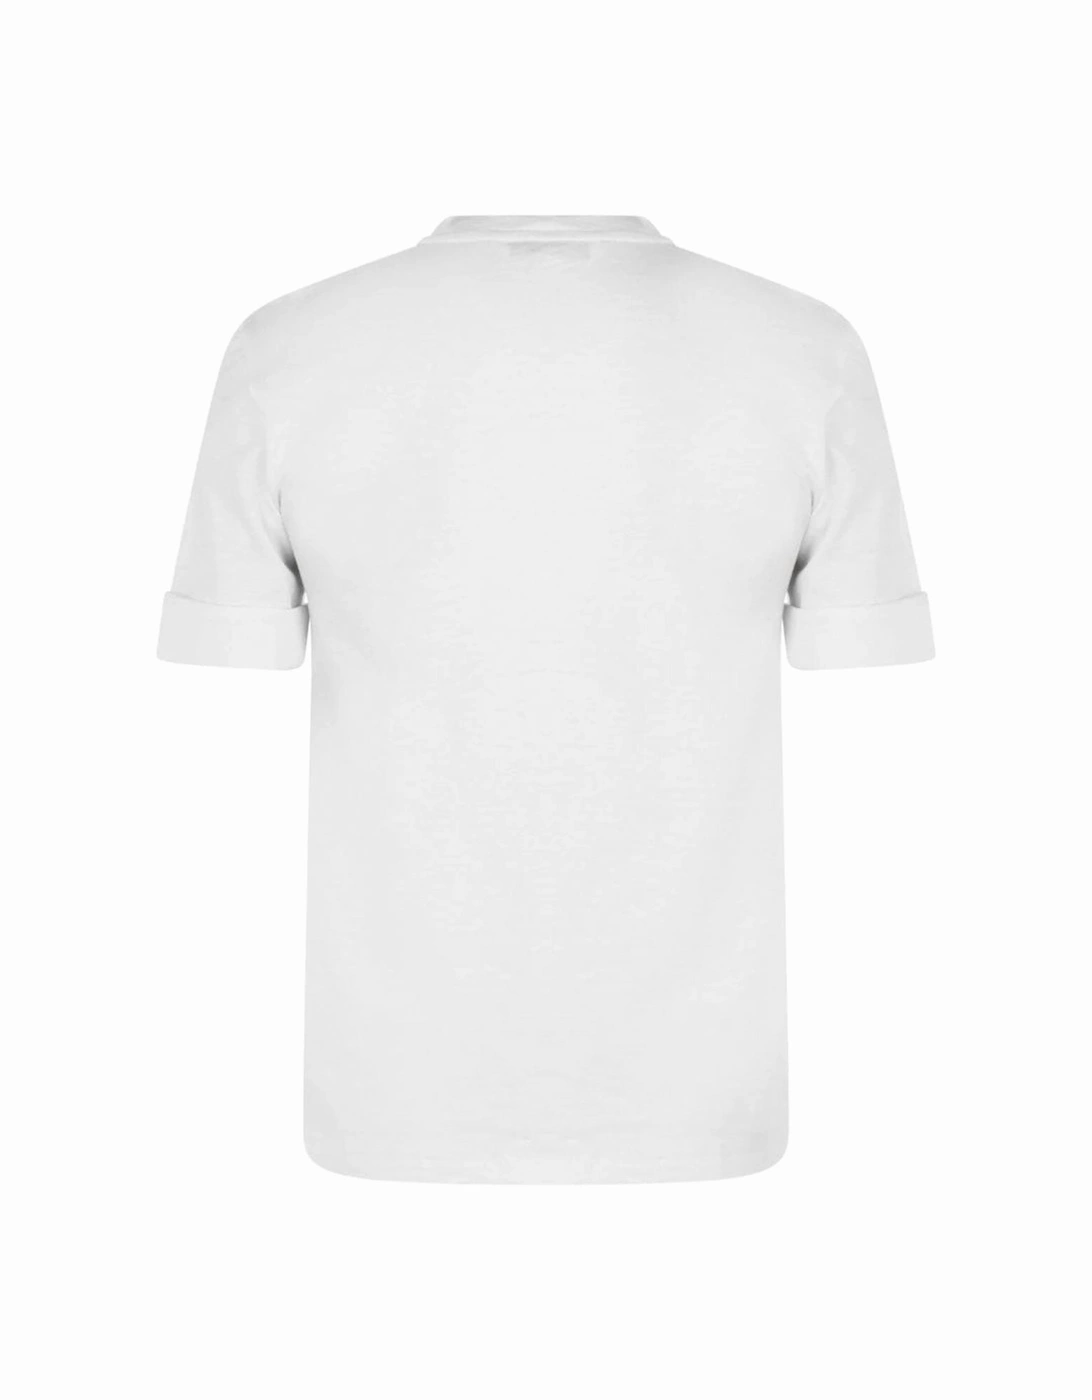 Men's College T-shirt White